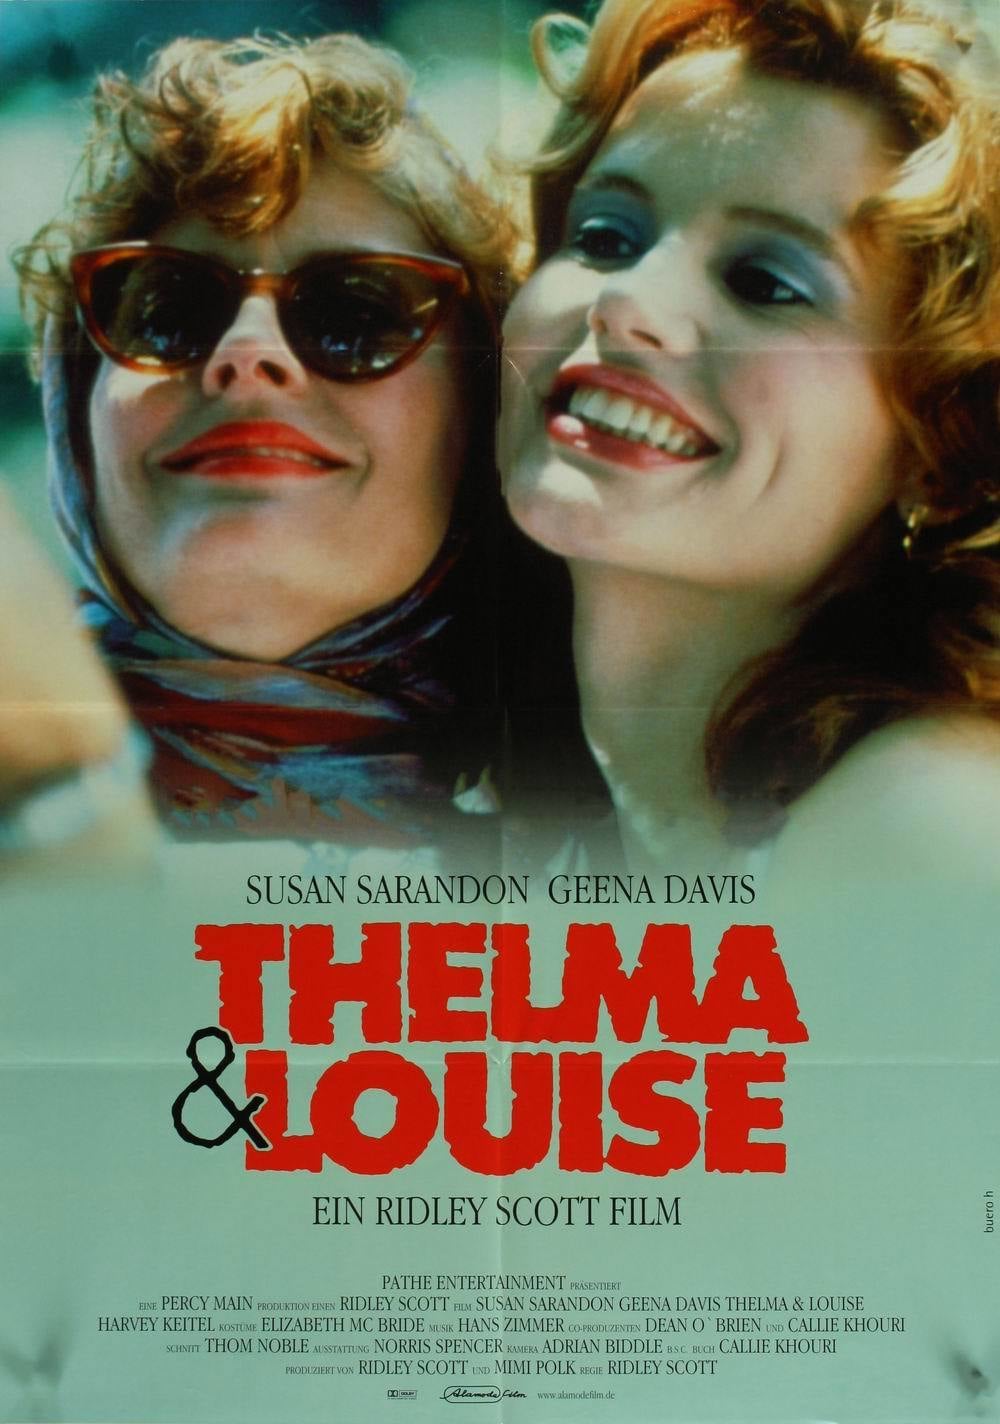 Plakat von "Thelma & Louise"